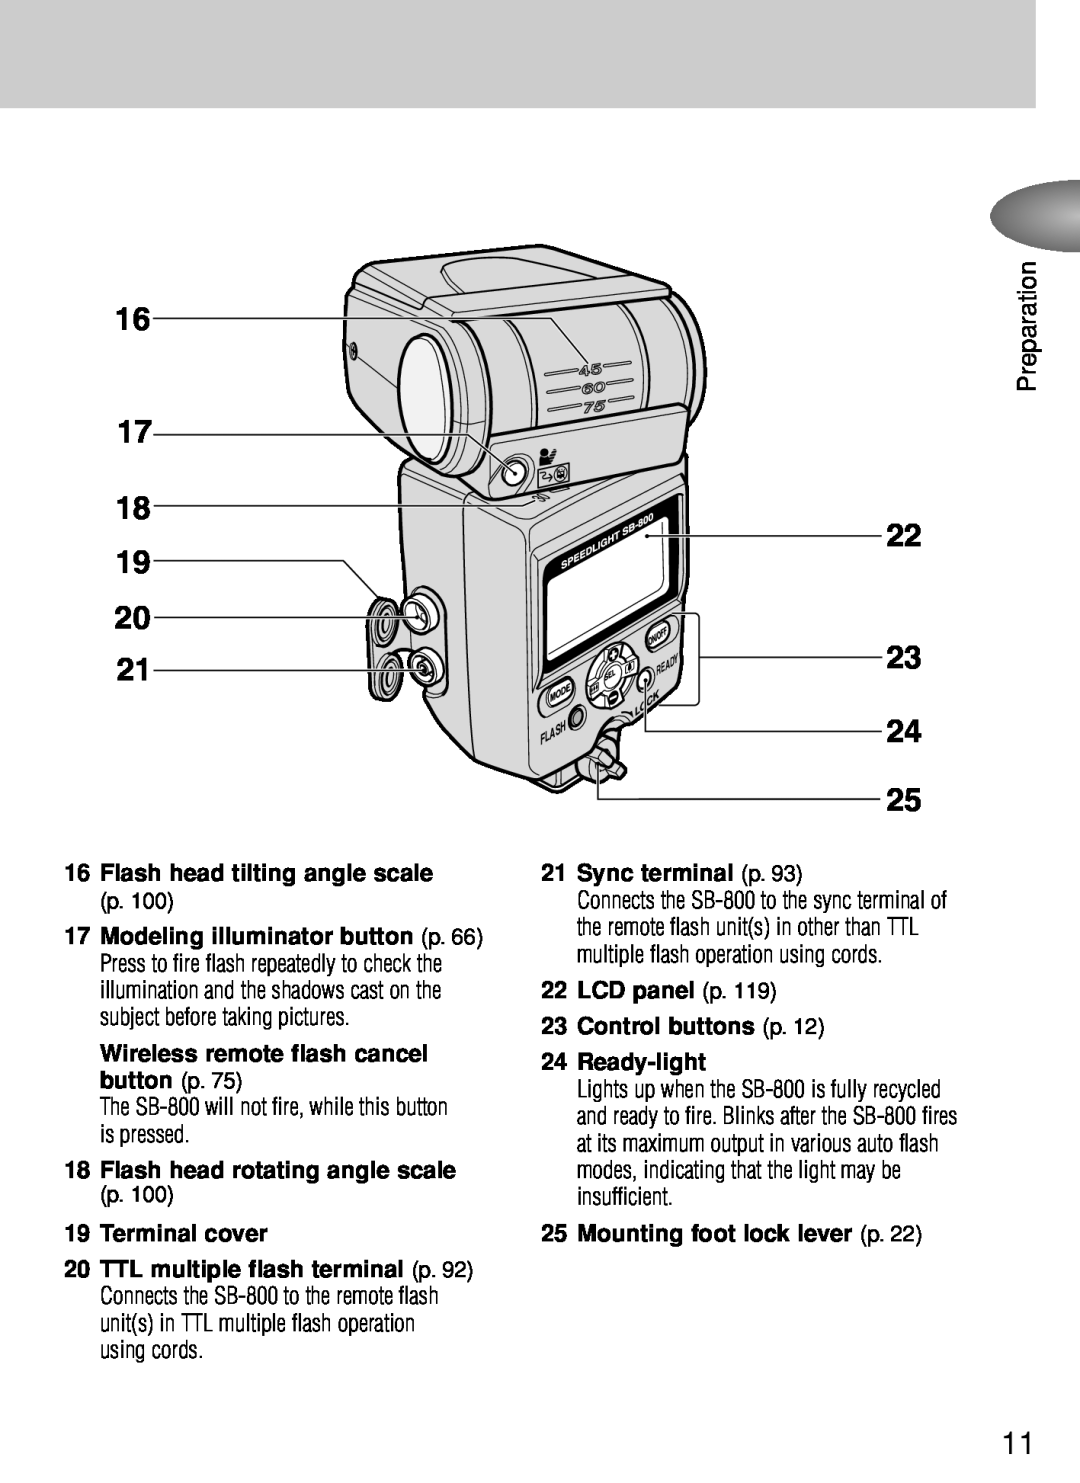 Nikon SB-800 instruction manual Flash head tilting angle scale, Wireless remote flash cancel button p, Sync terminal p 